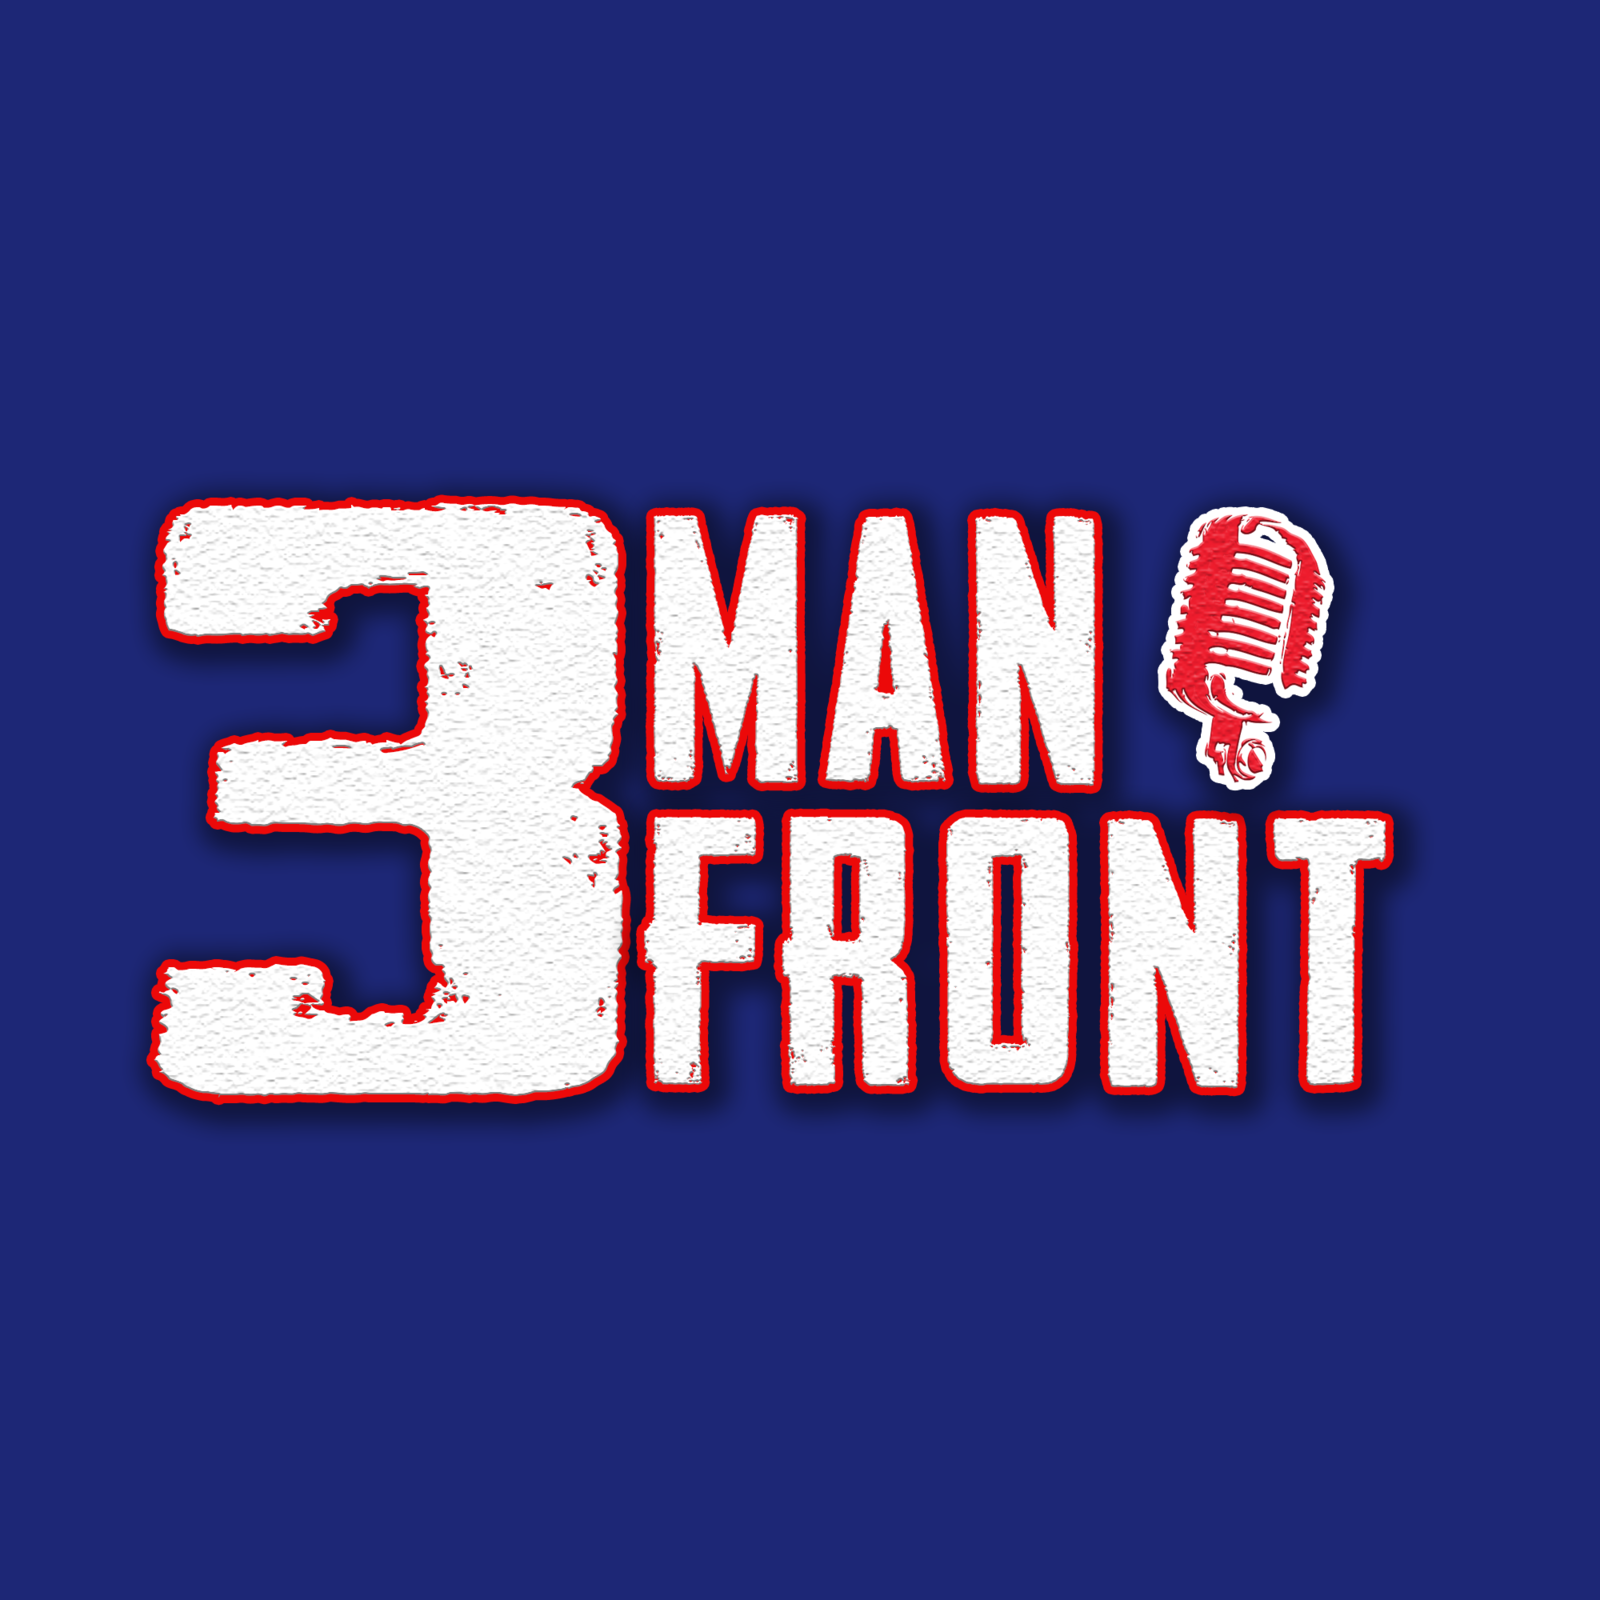 3 Man Front: Charlie Potter shares the latest Alabama transfer portal news